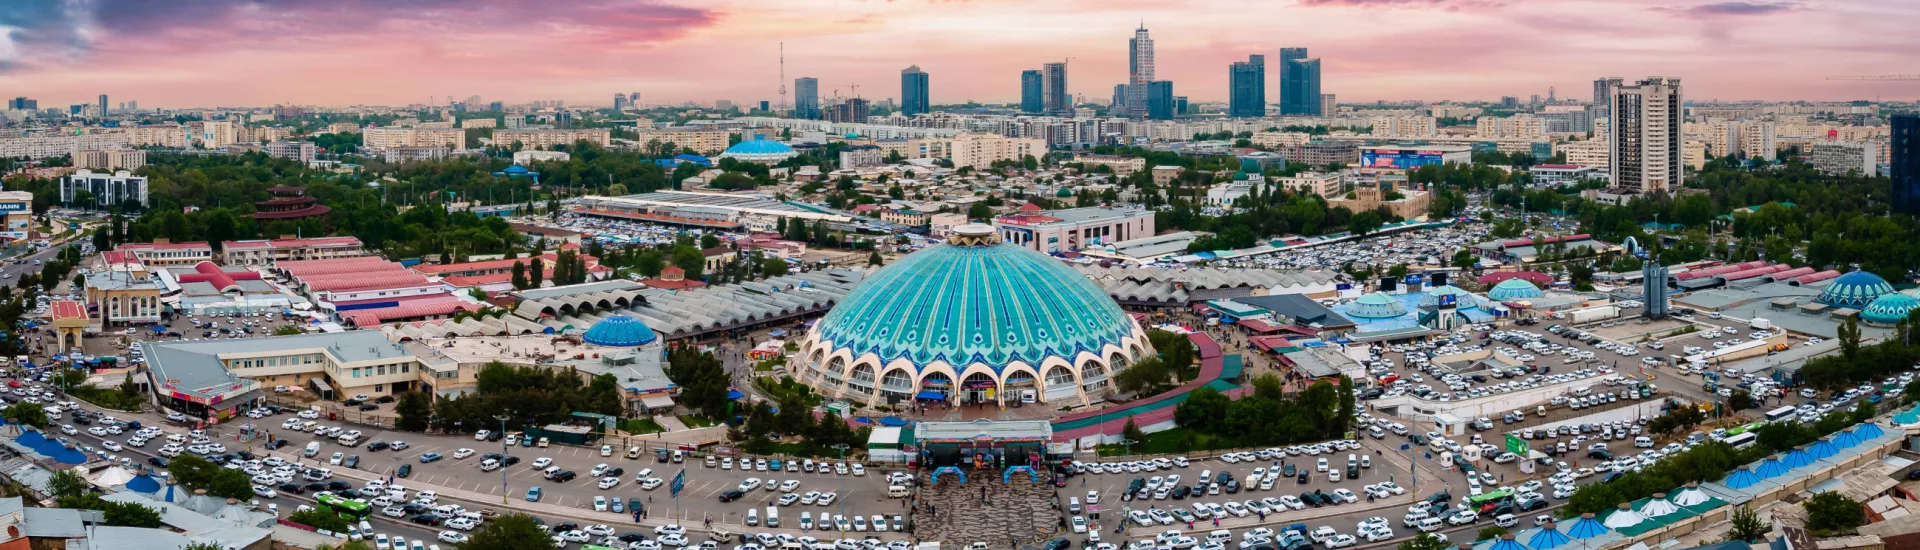 A bird's eye view of Tashkent, Uzbekistan